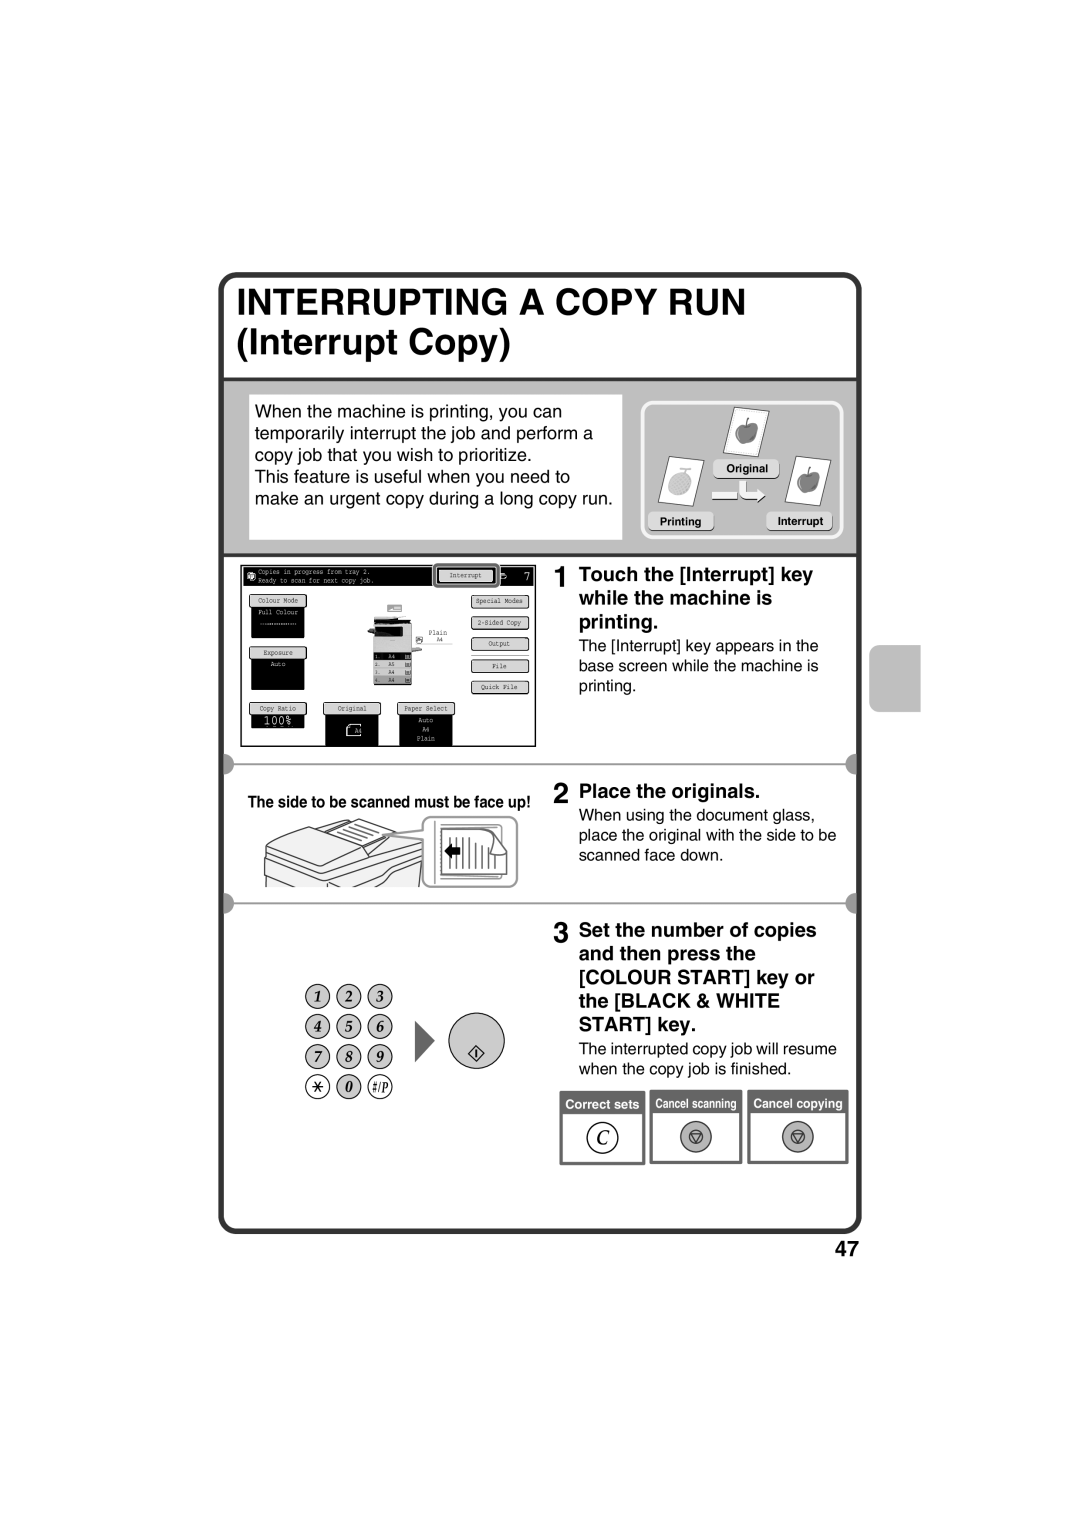 Sharp MX-C381, MX-C311 INTERRUPTING A COPY RUN Interrupt Copy, Touch the Interrupt key while the machine is printing 